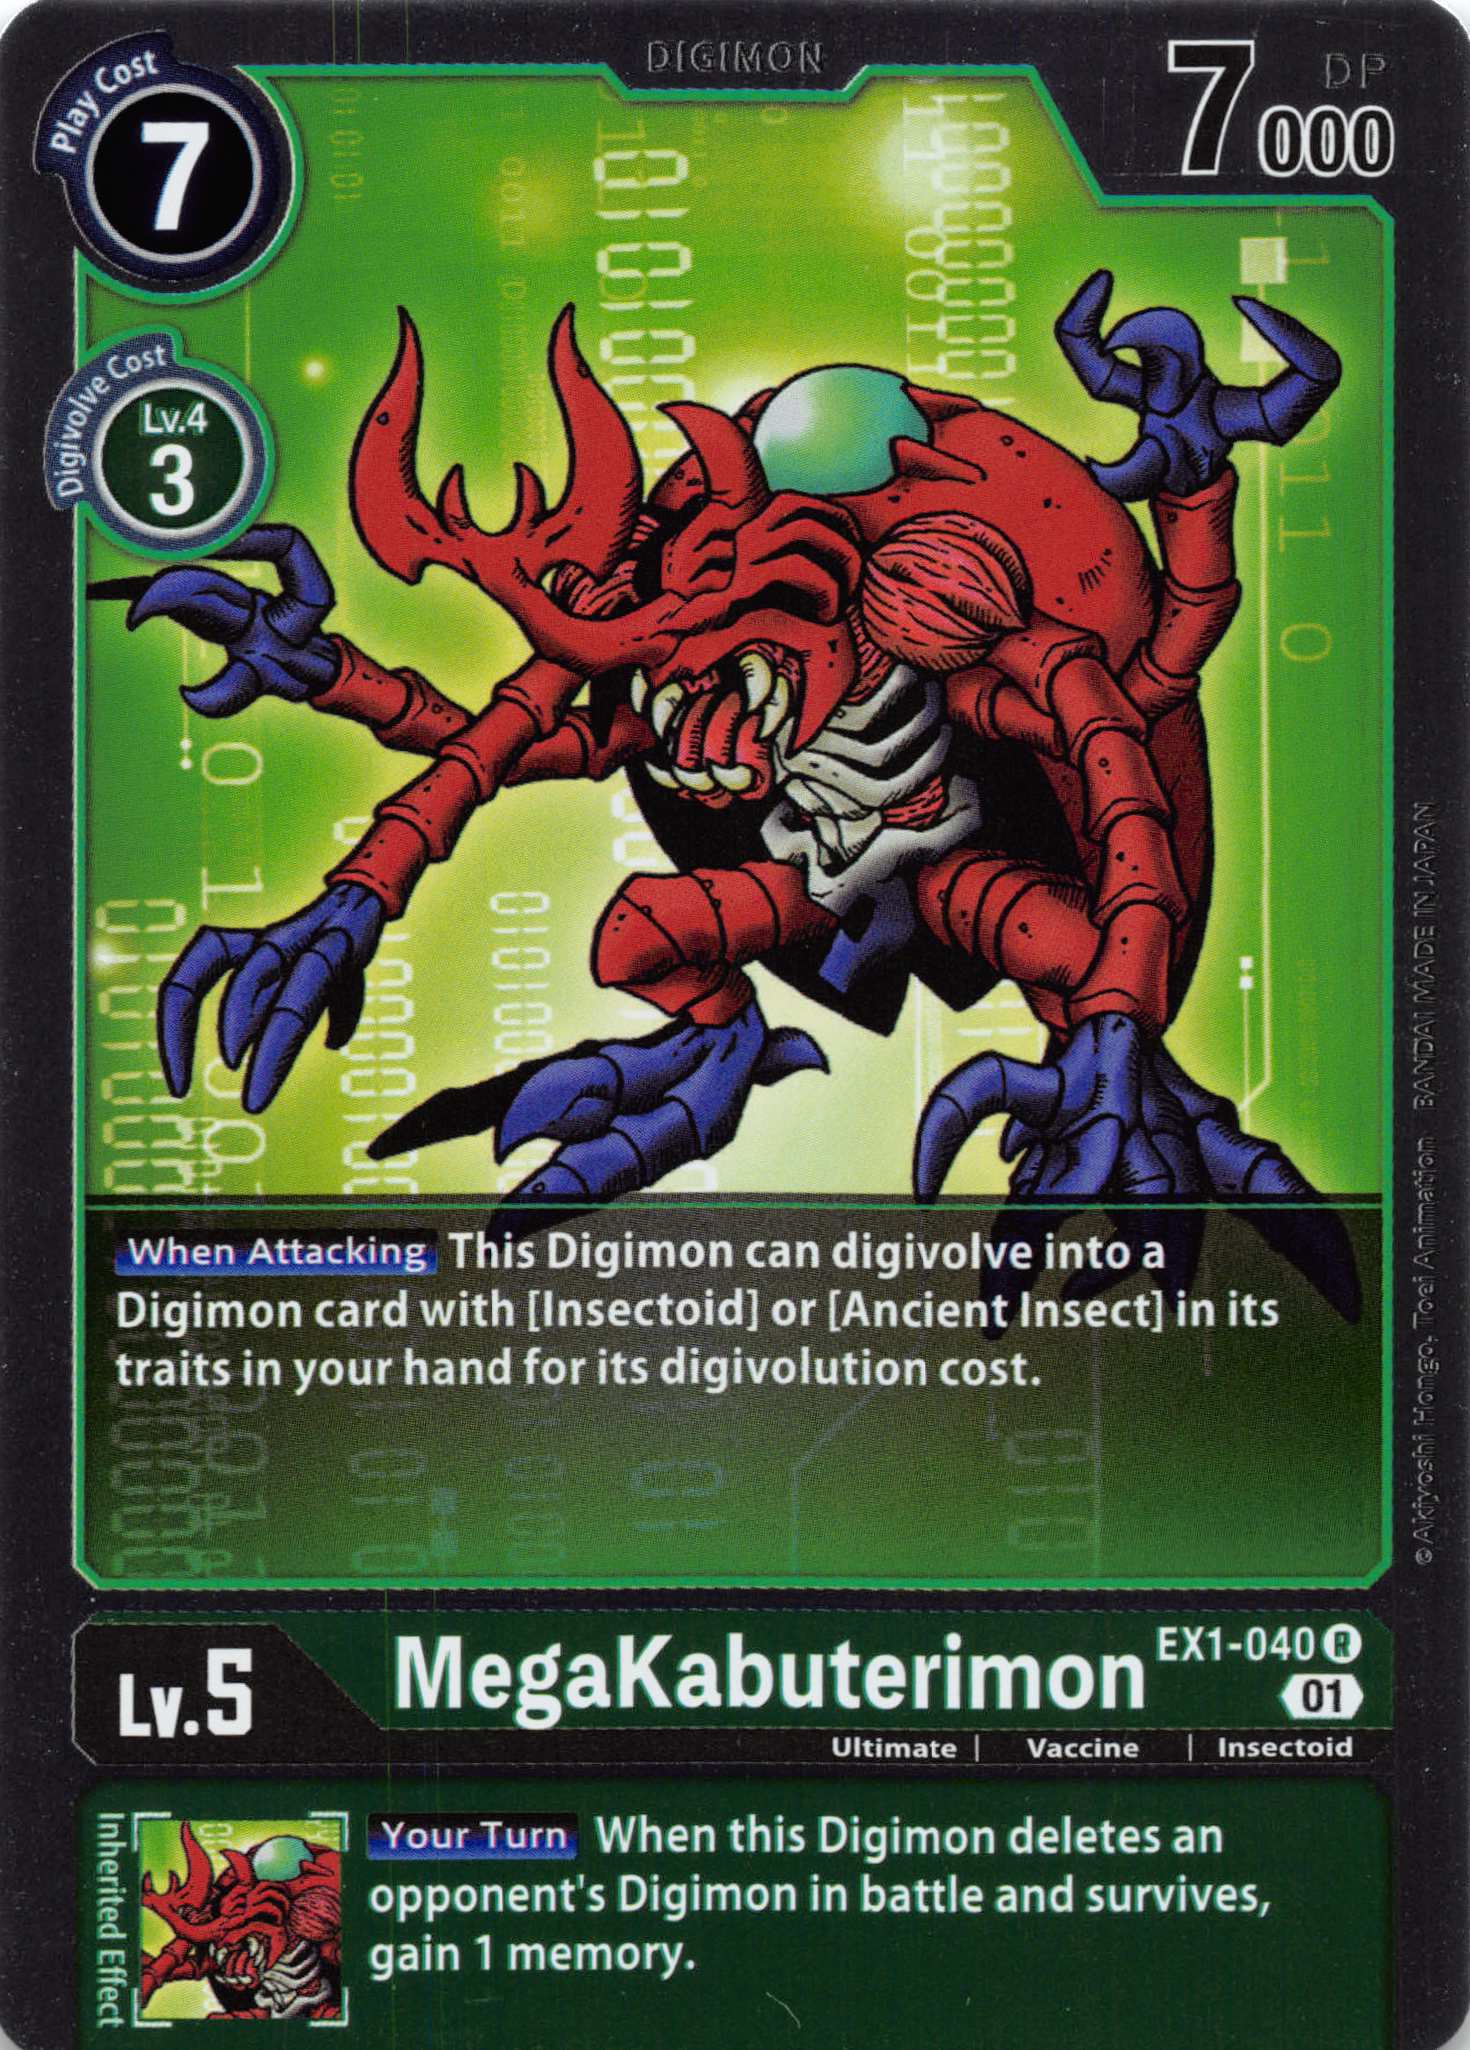 Restocked Digimon Cards